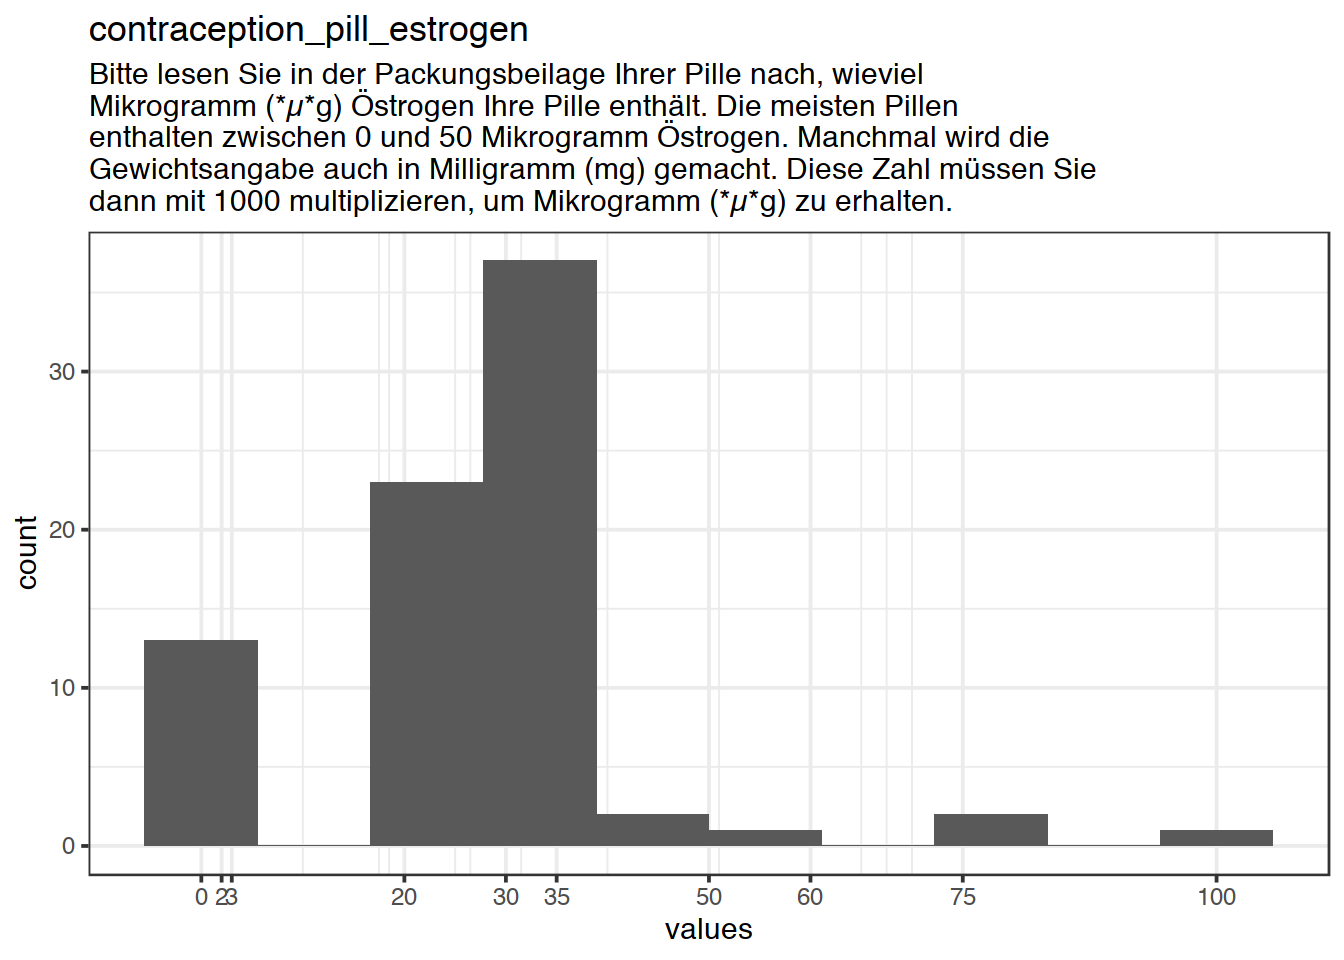 Distribution of values for contraception_pill_estrogen